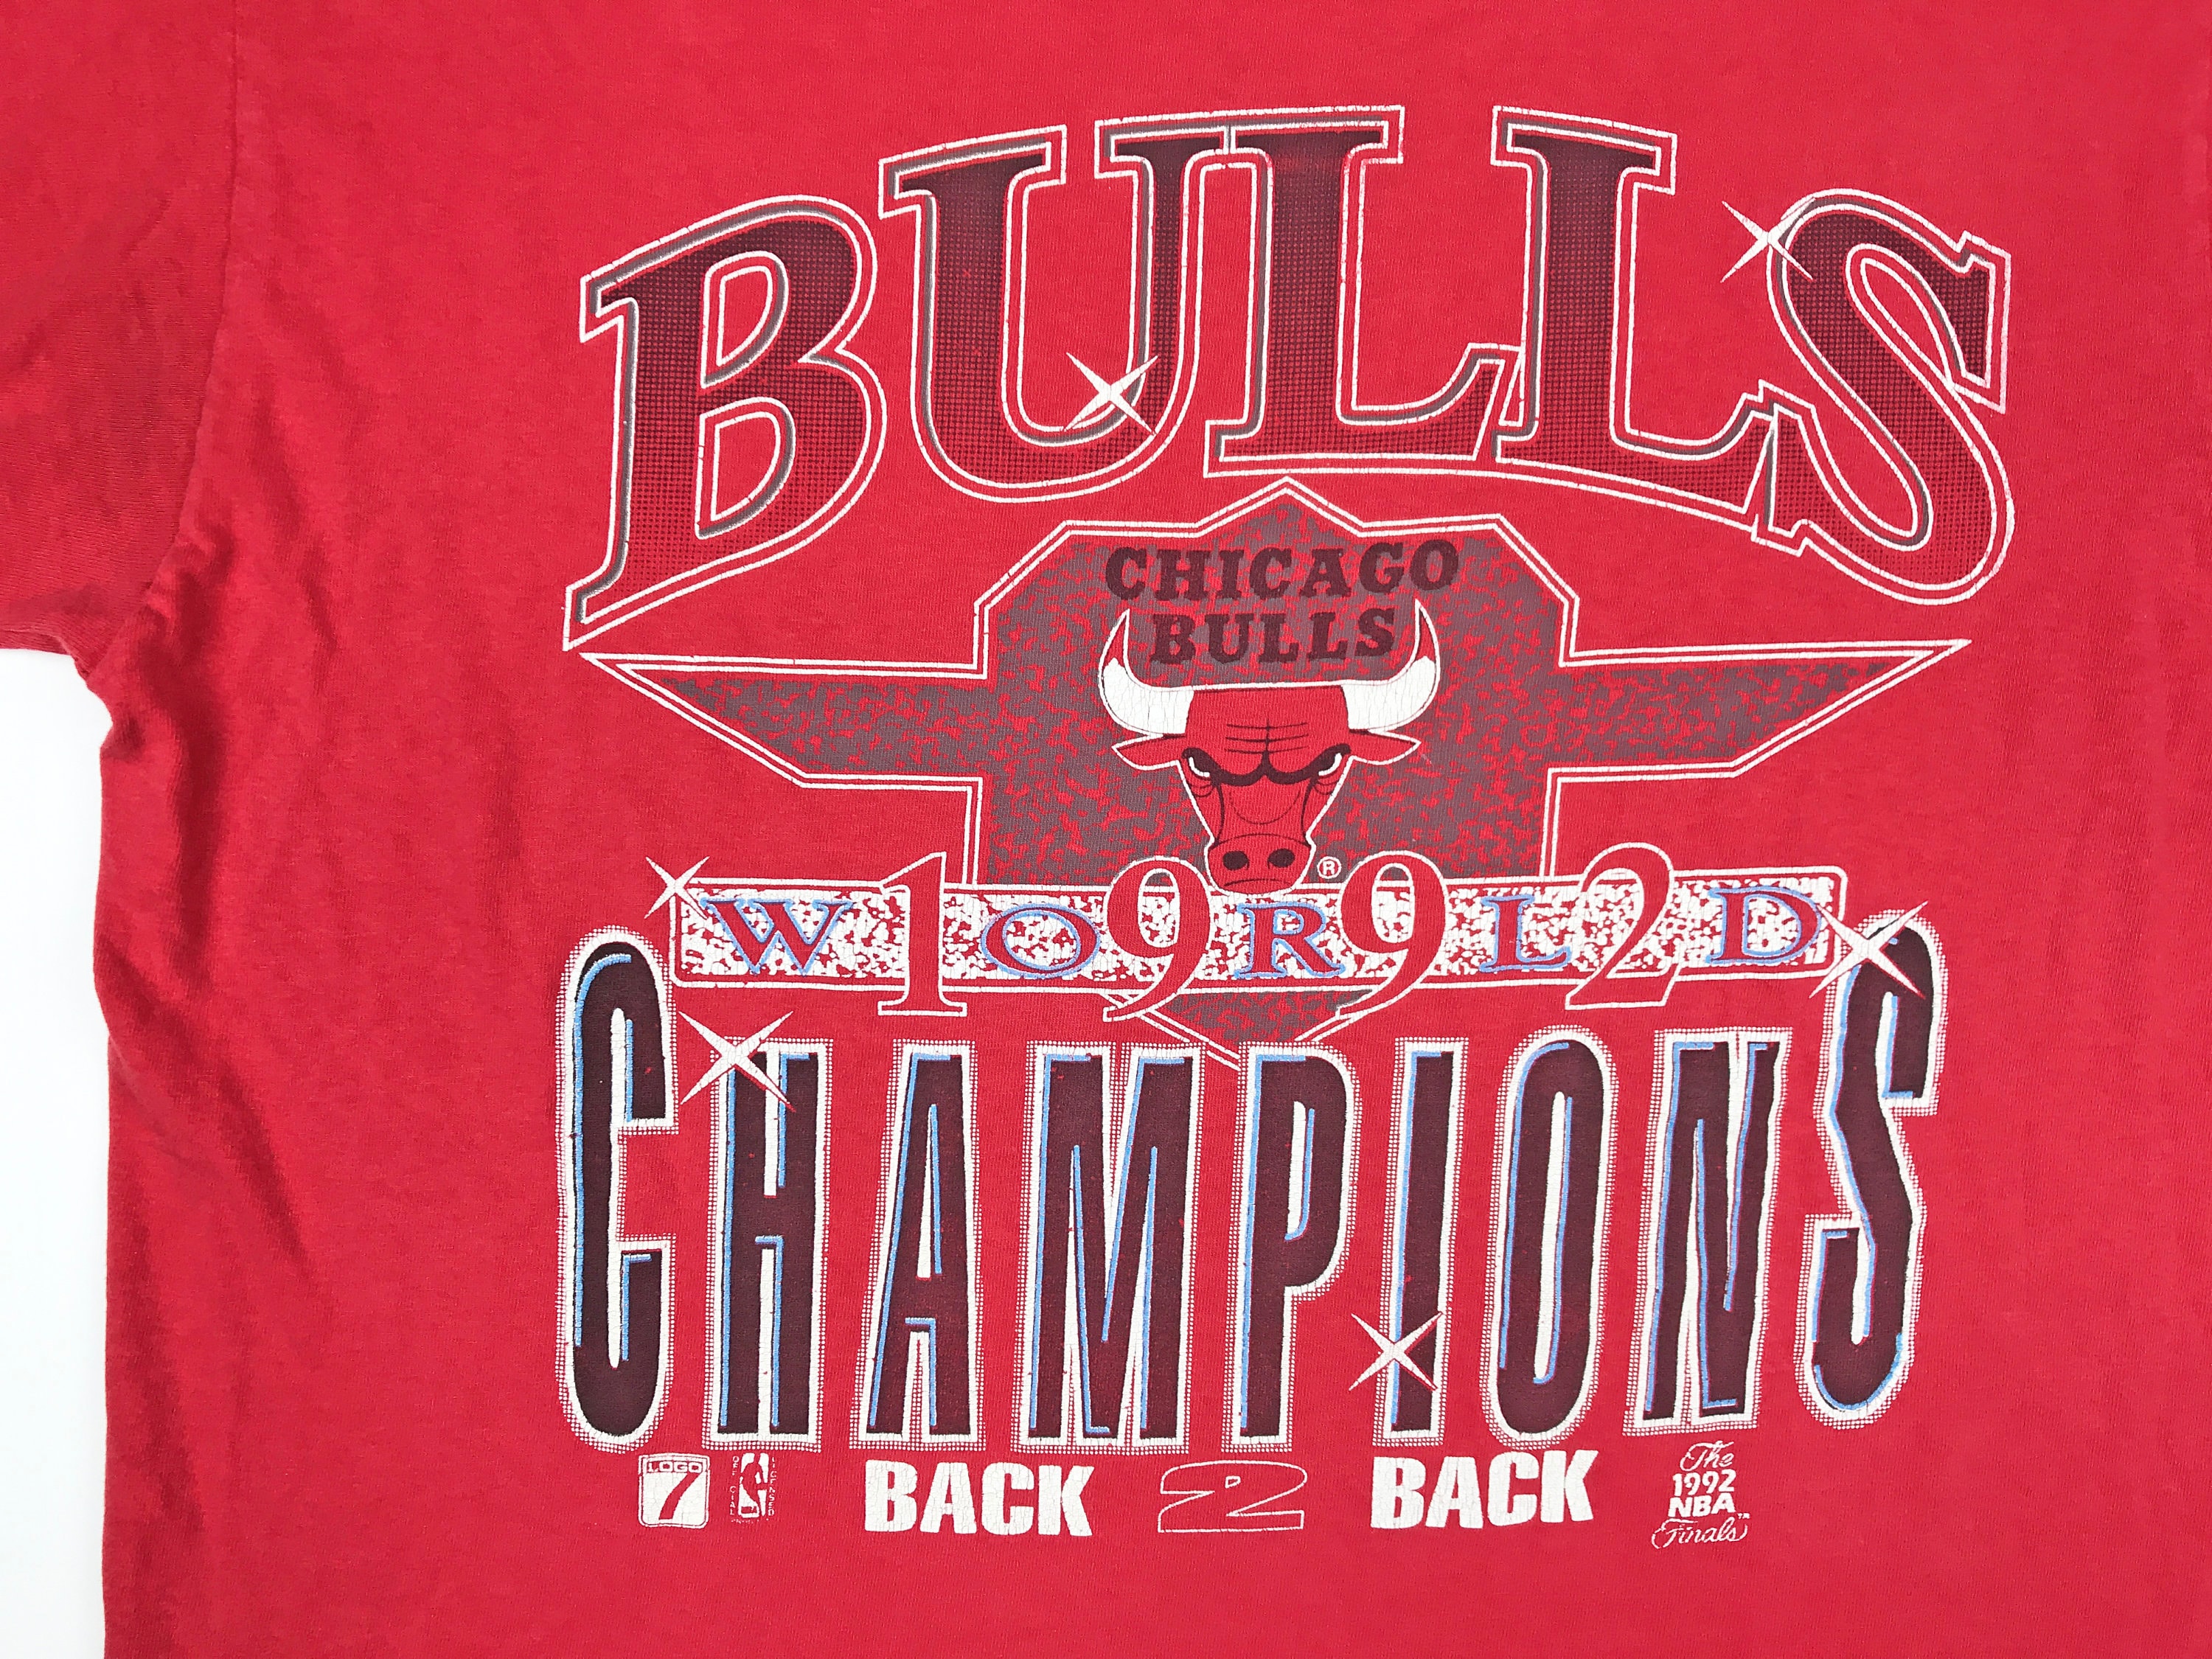 StranStarsBest 90s Vintage Chicago Bulls 1991 NBA Finals World Champs Champions Basketball T-Shirt - Small